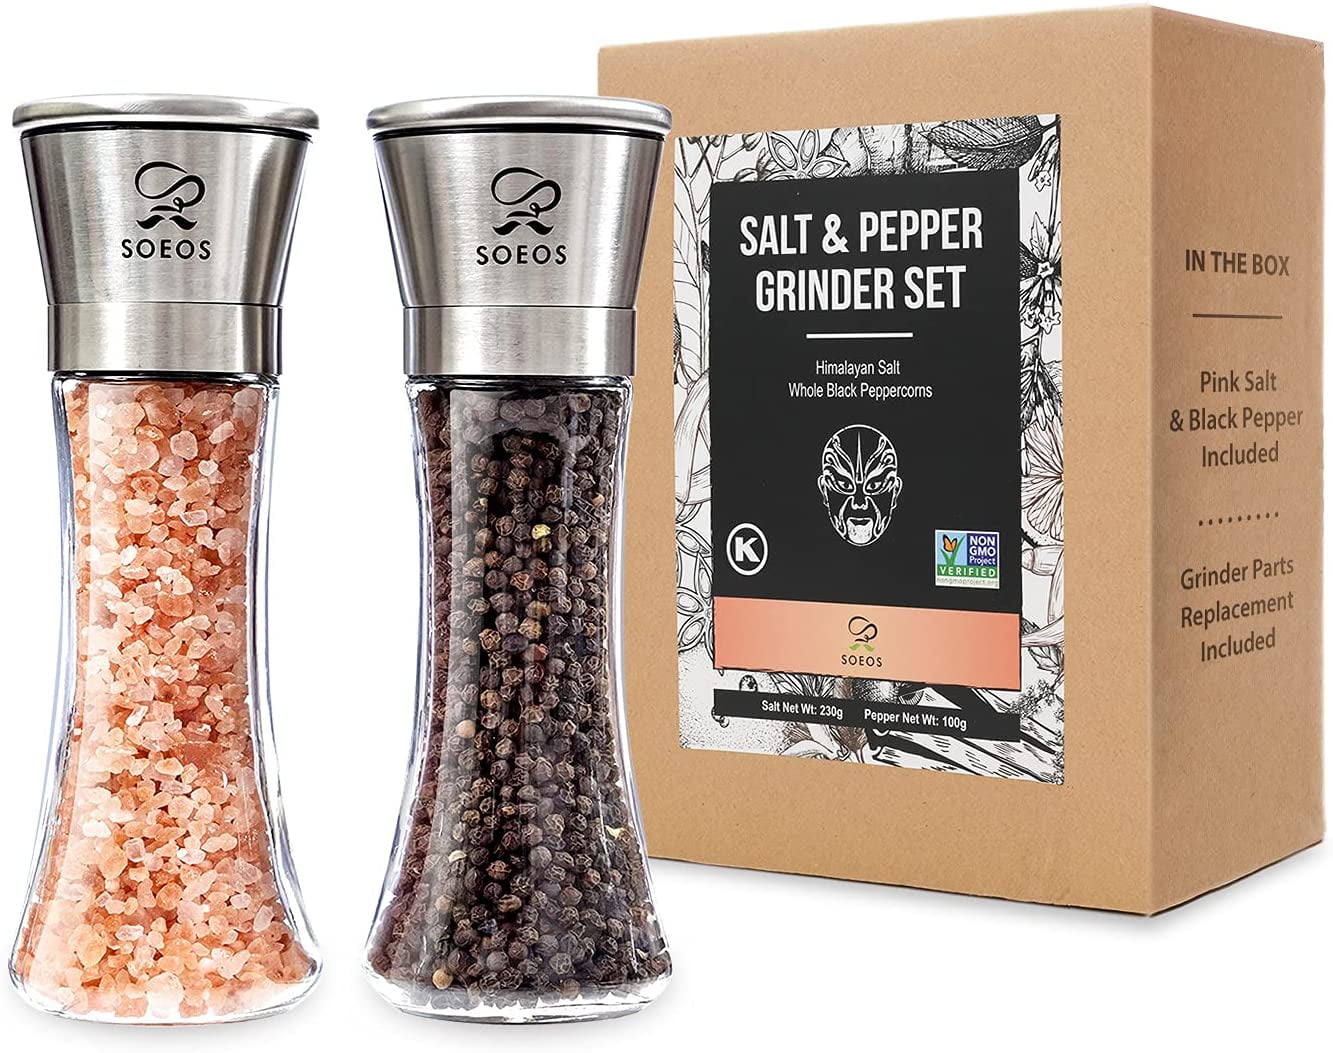 Soeos Salt and Pepper Grinder Set, Organic Whole Black Peppercorns, 35oz (100g), Himalayan Pink Salt, 8oz (230g) USDA Organic Bl